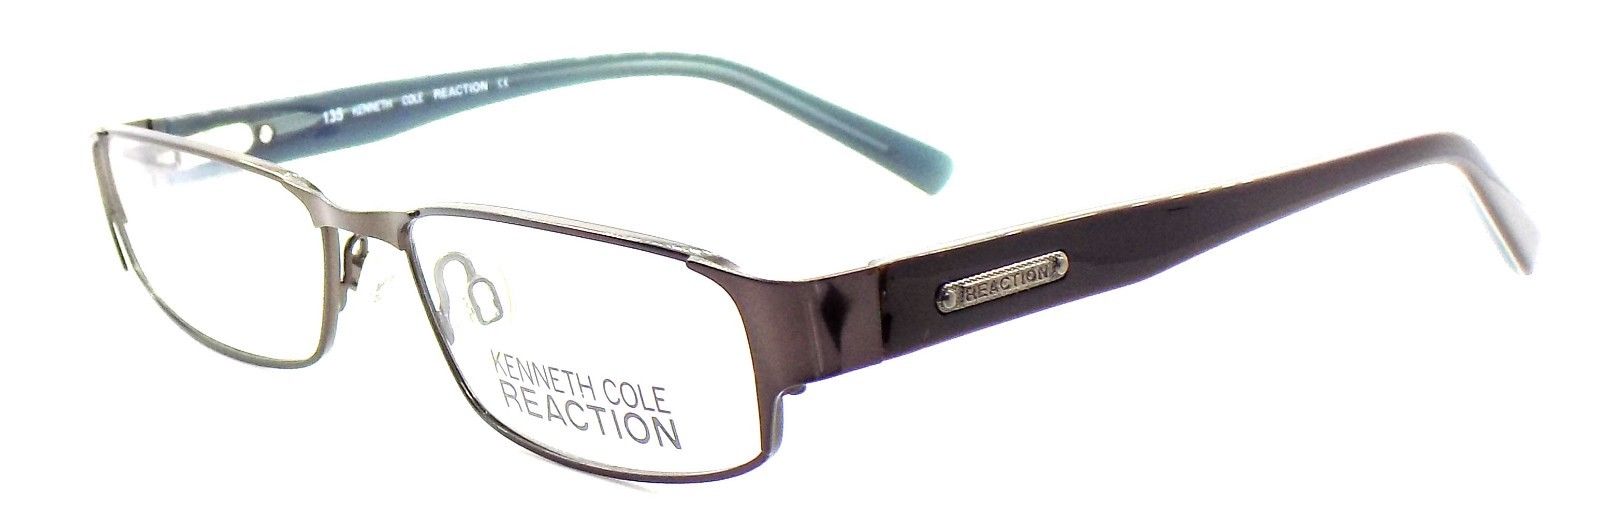 1-Kenneth Cole REACTION KC716 048 Women's Eyeglasses 51-15-135 Shiny Dark Brown-726773169125-IKSpecs